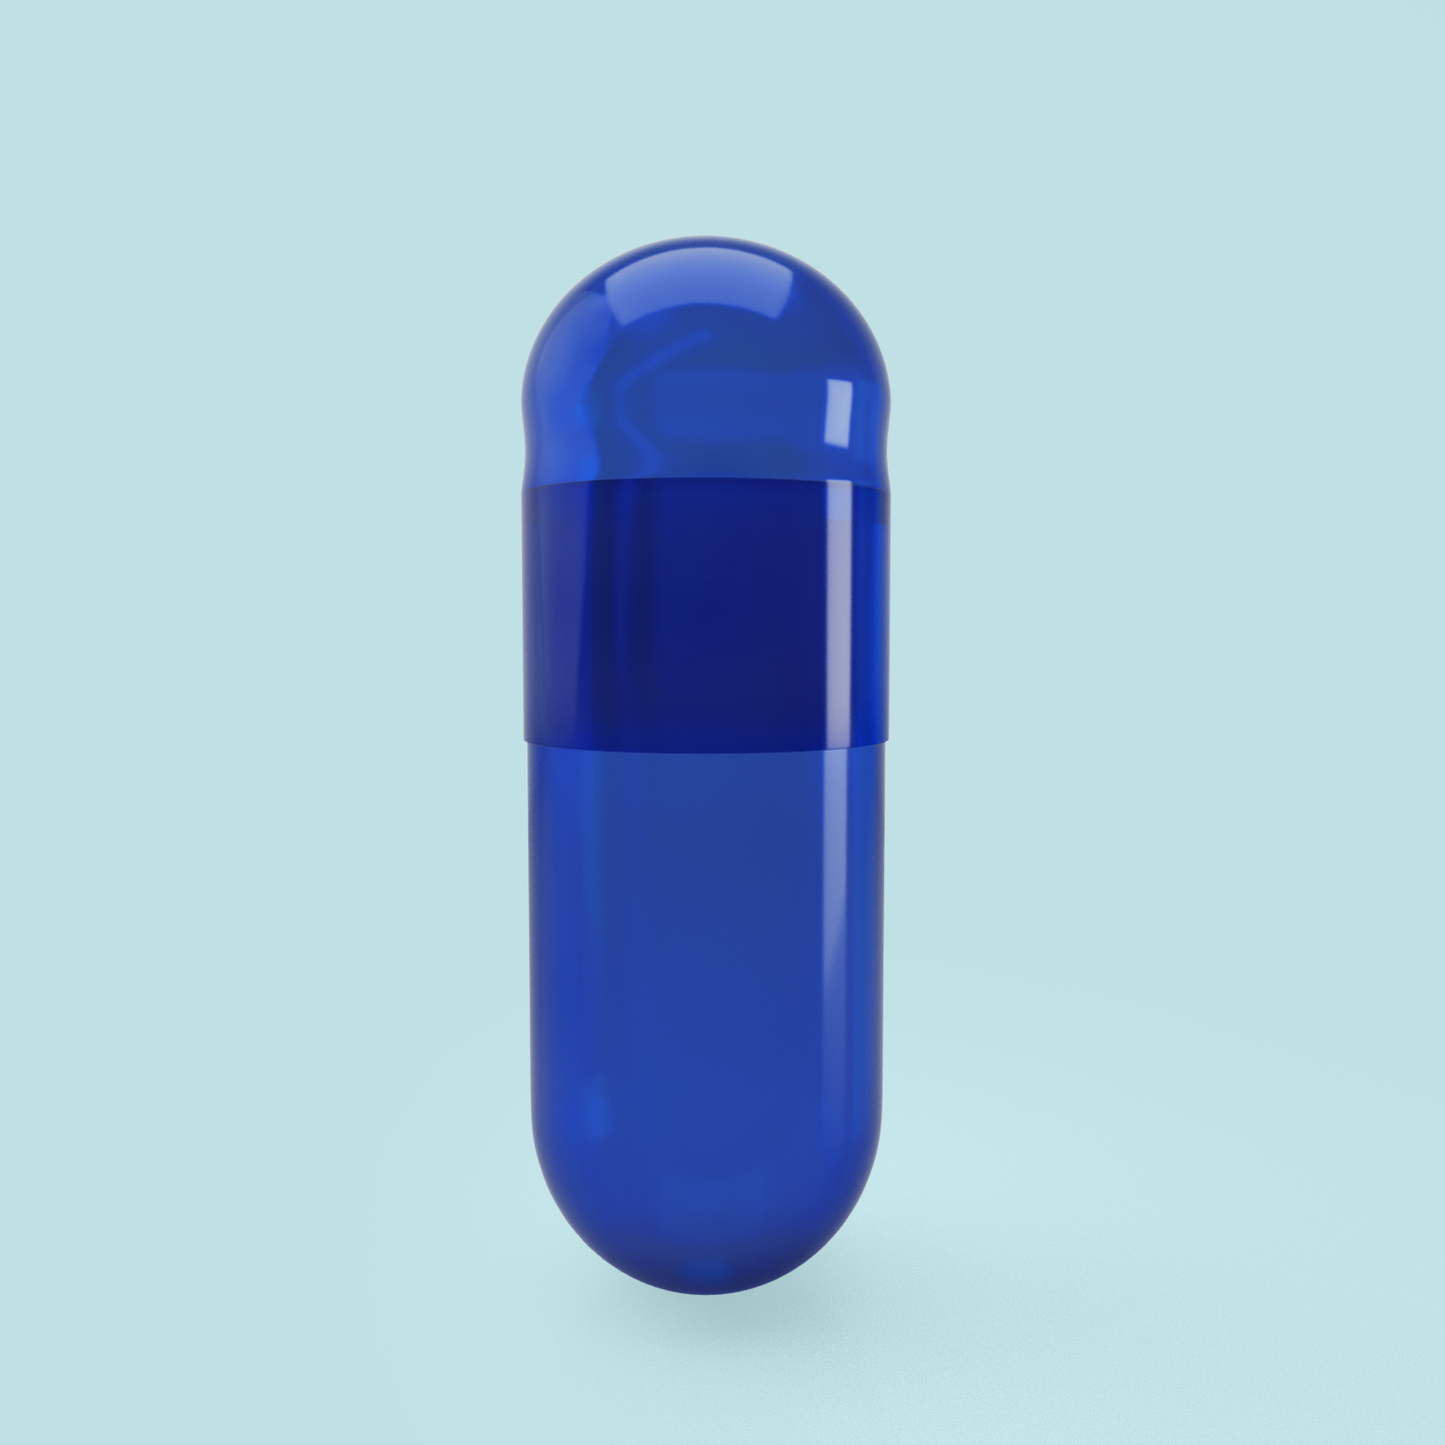 Titanium Dioxide (TiO2) Free - Colored Empty Gelatin Capsules Size 0 (Box of 100,000) - Blue